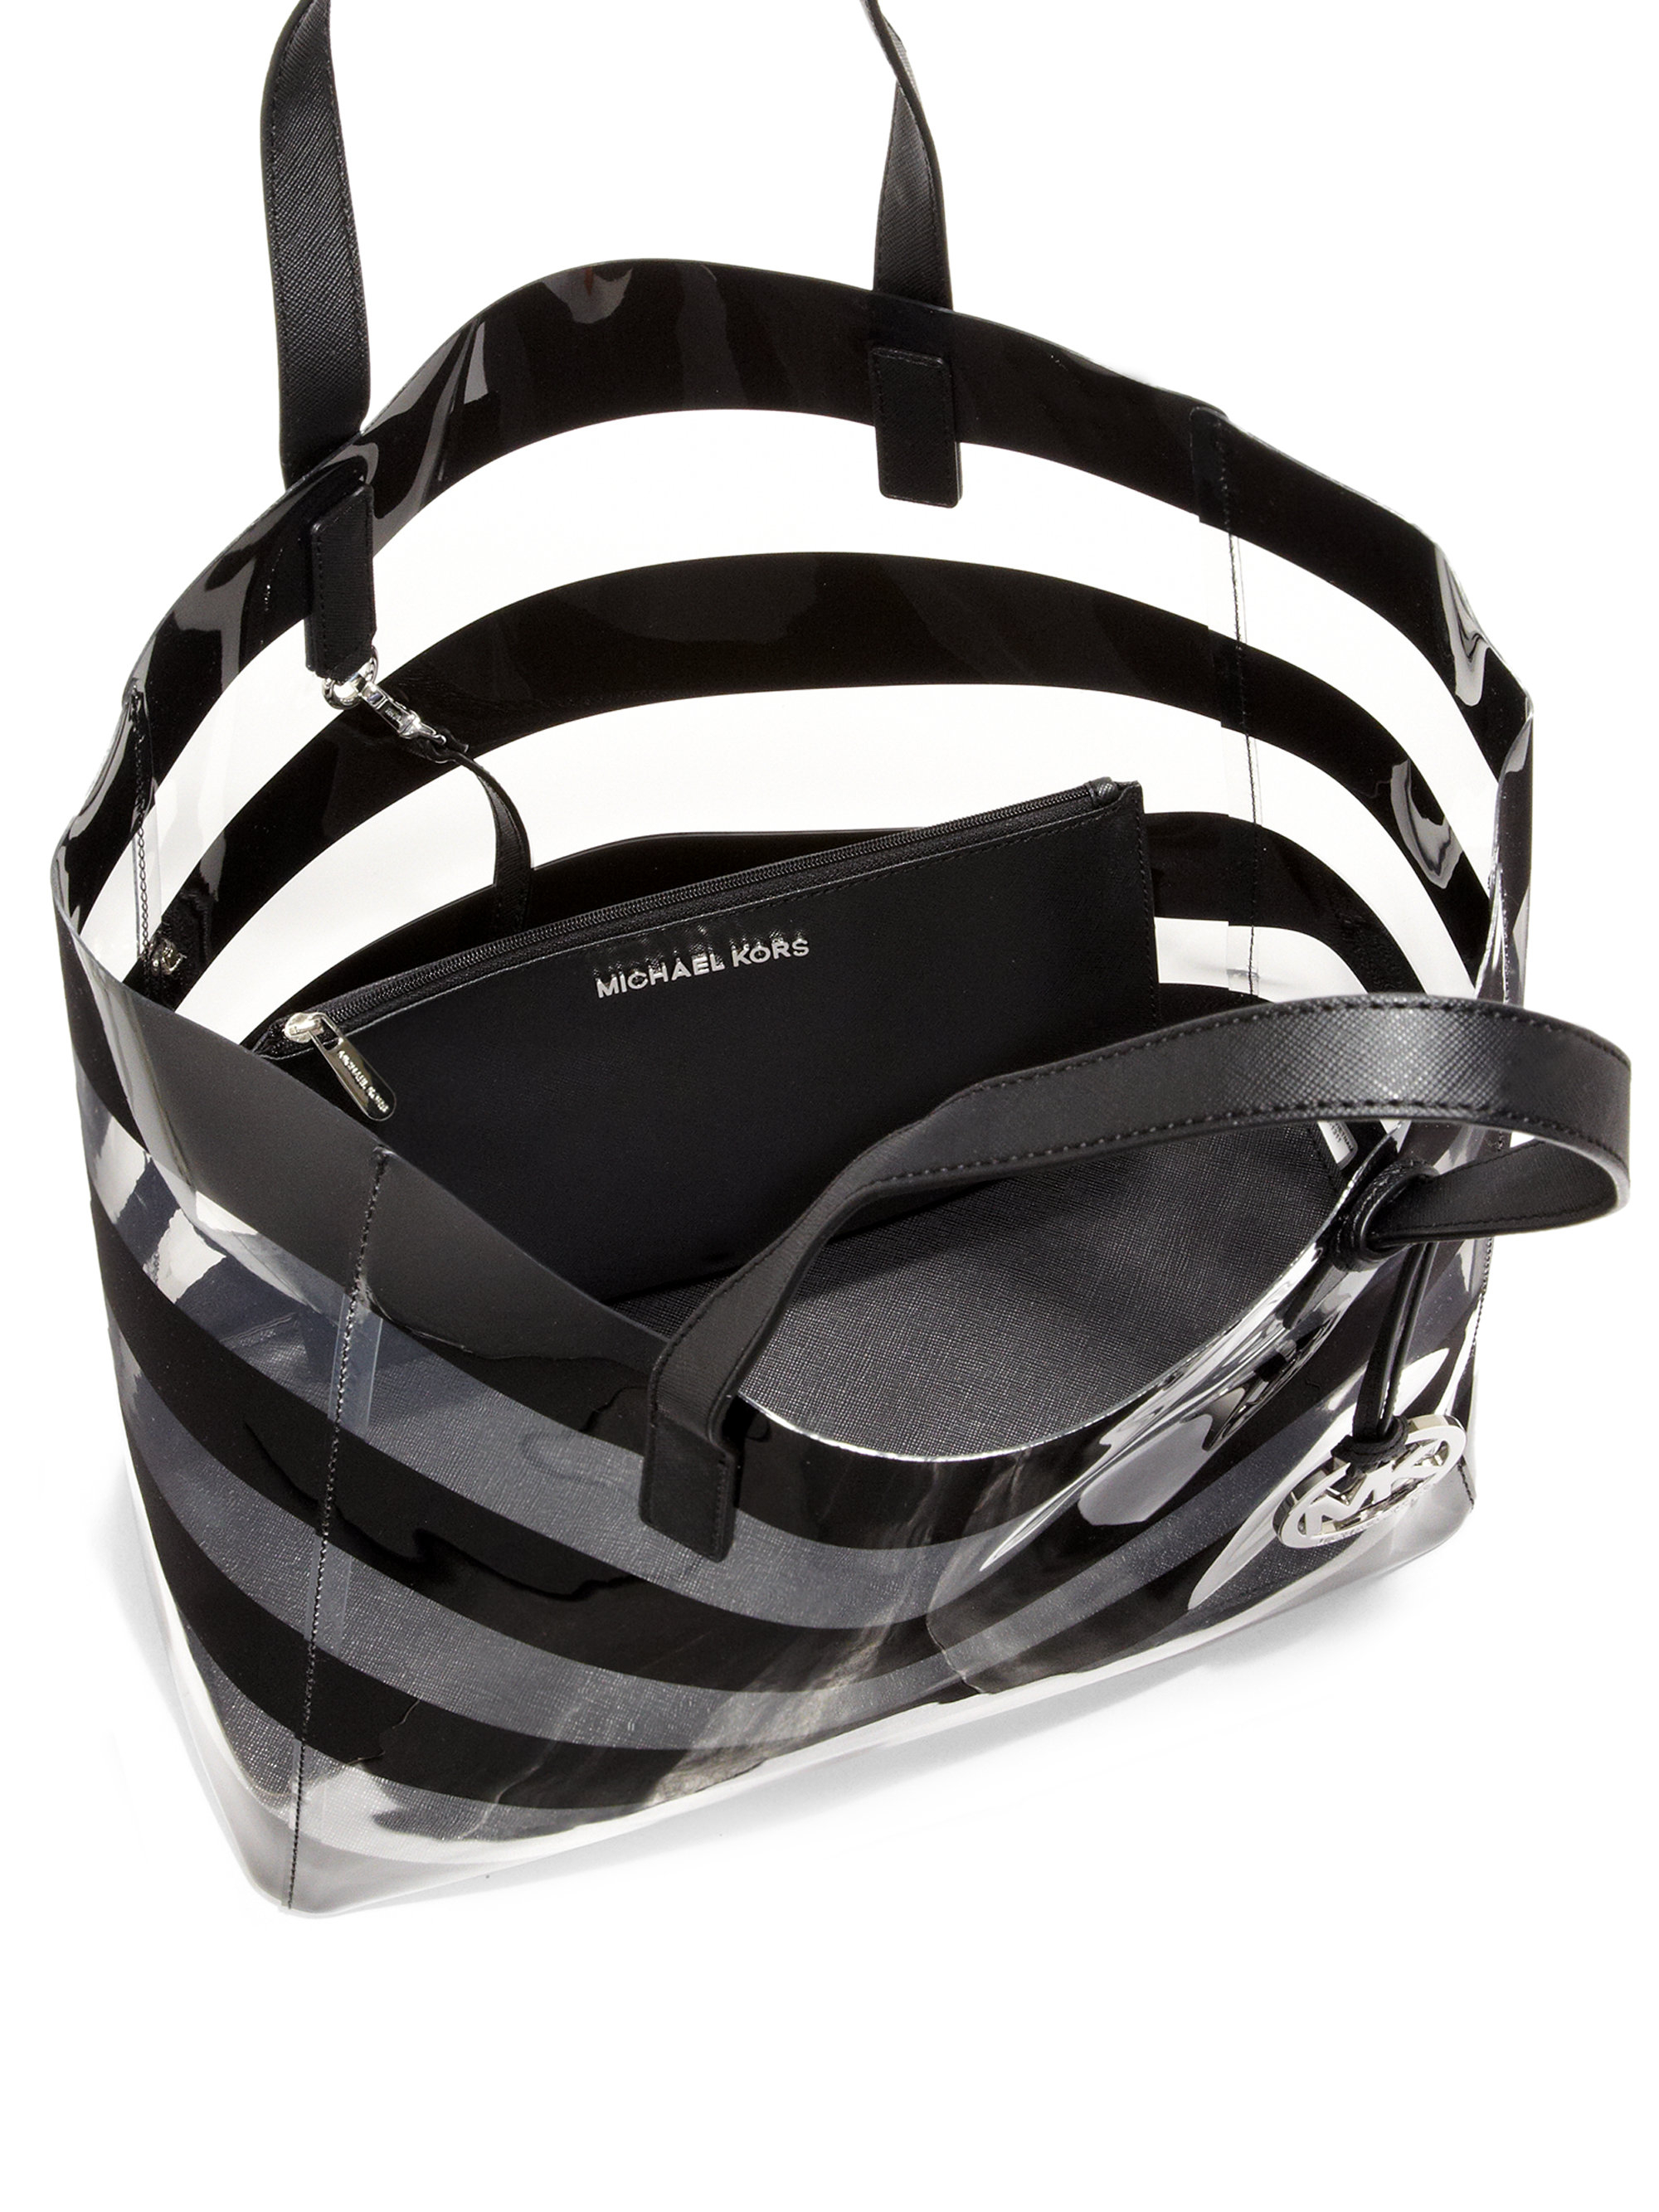 Michael Kors black and white stripes bag